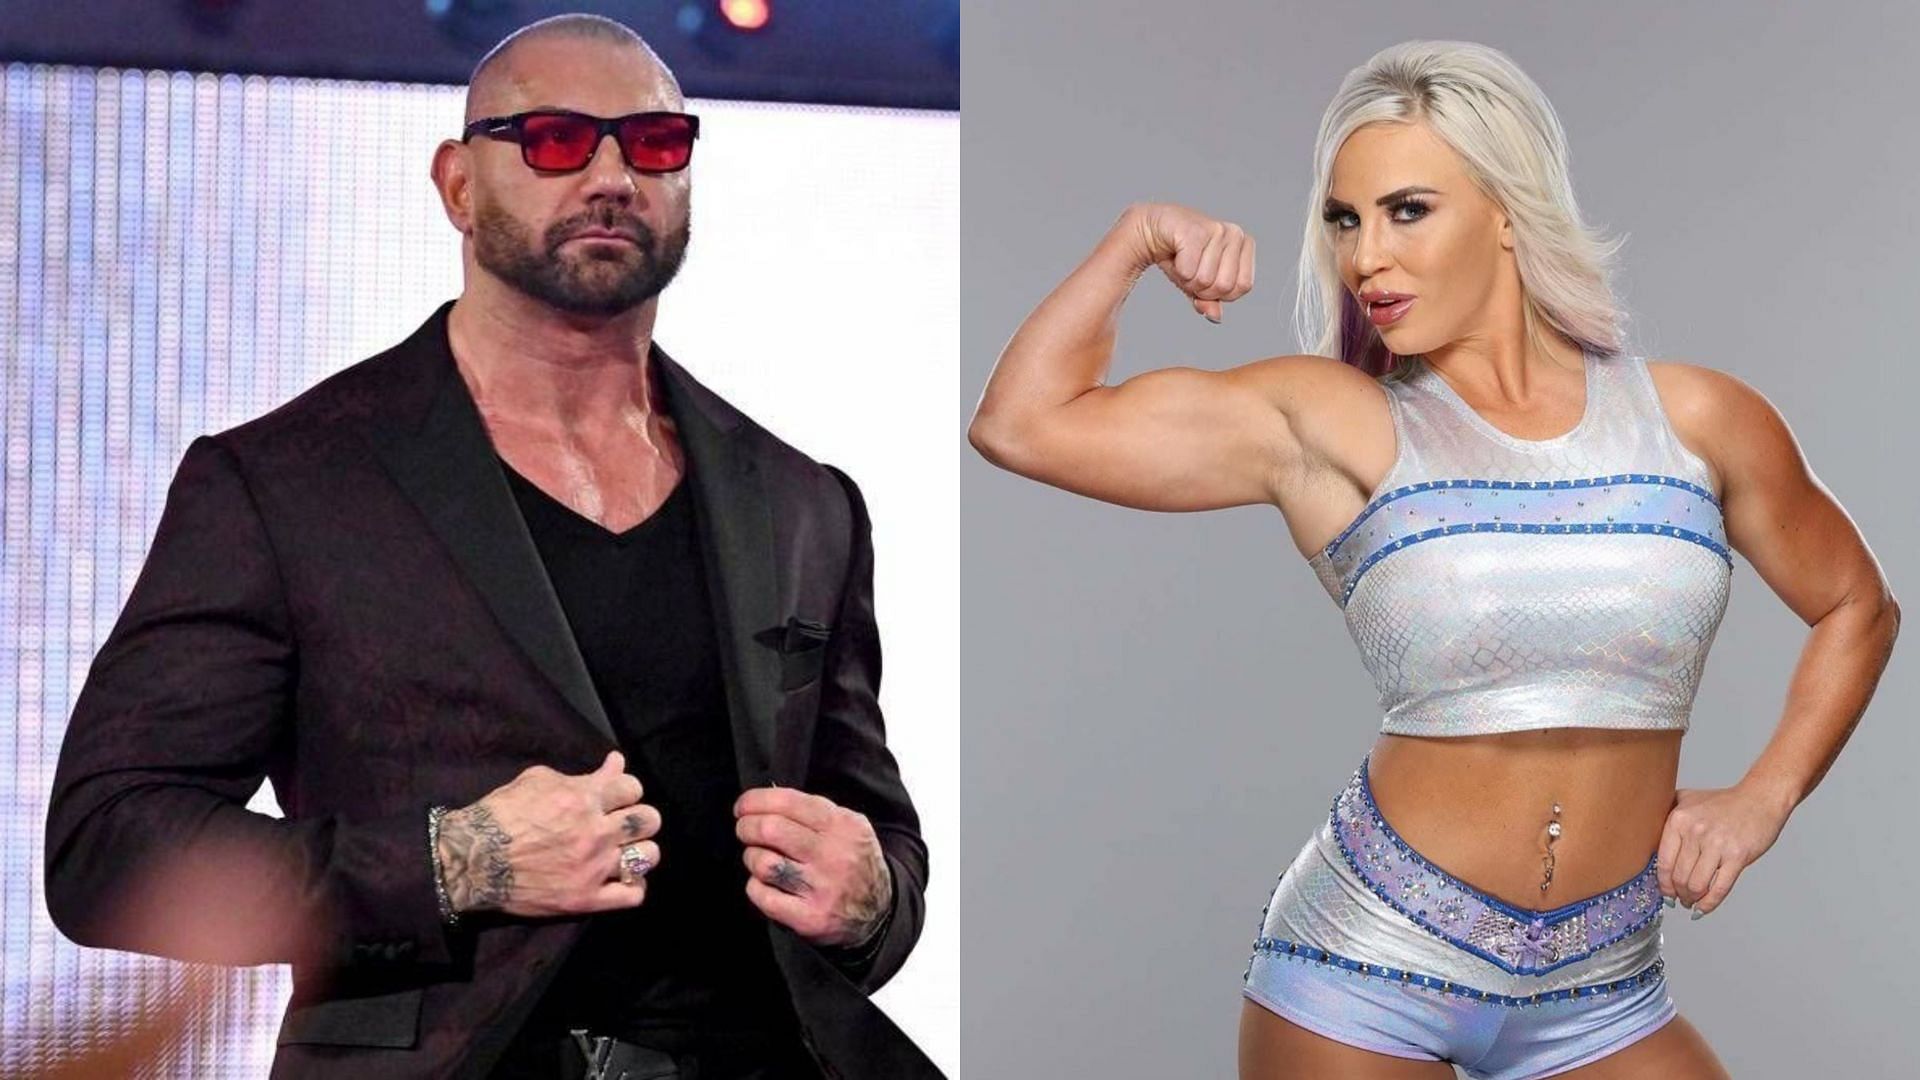 Batista and Dana Brooke openly flirted on Twitter in 2019